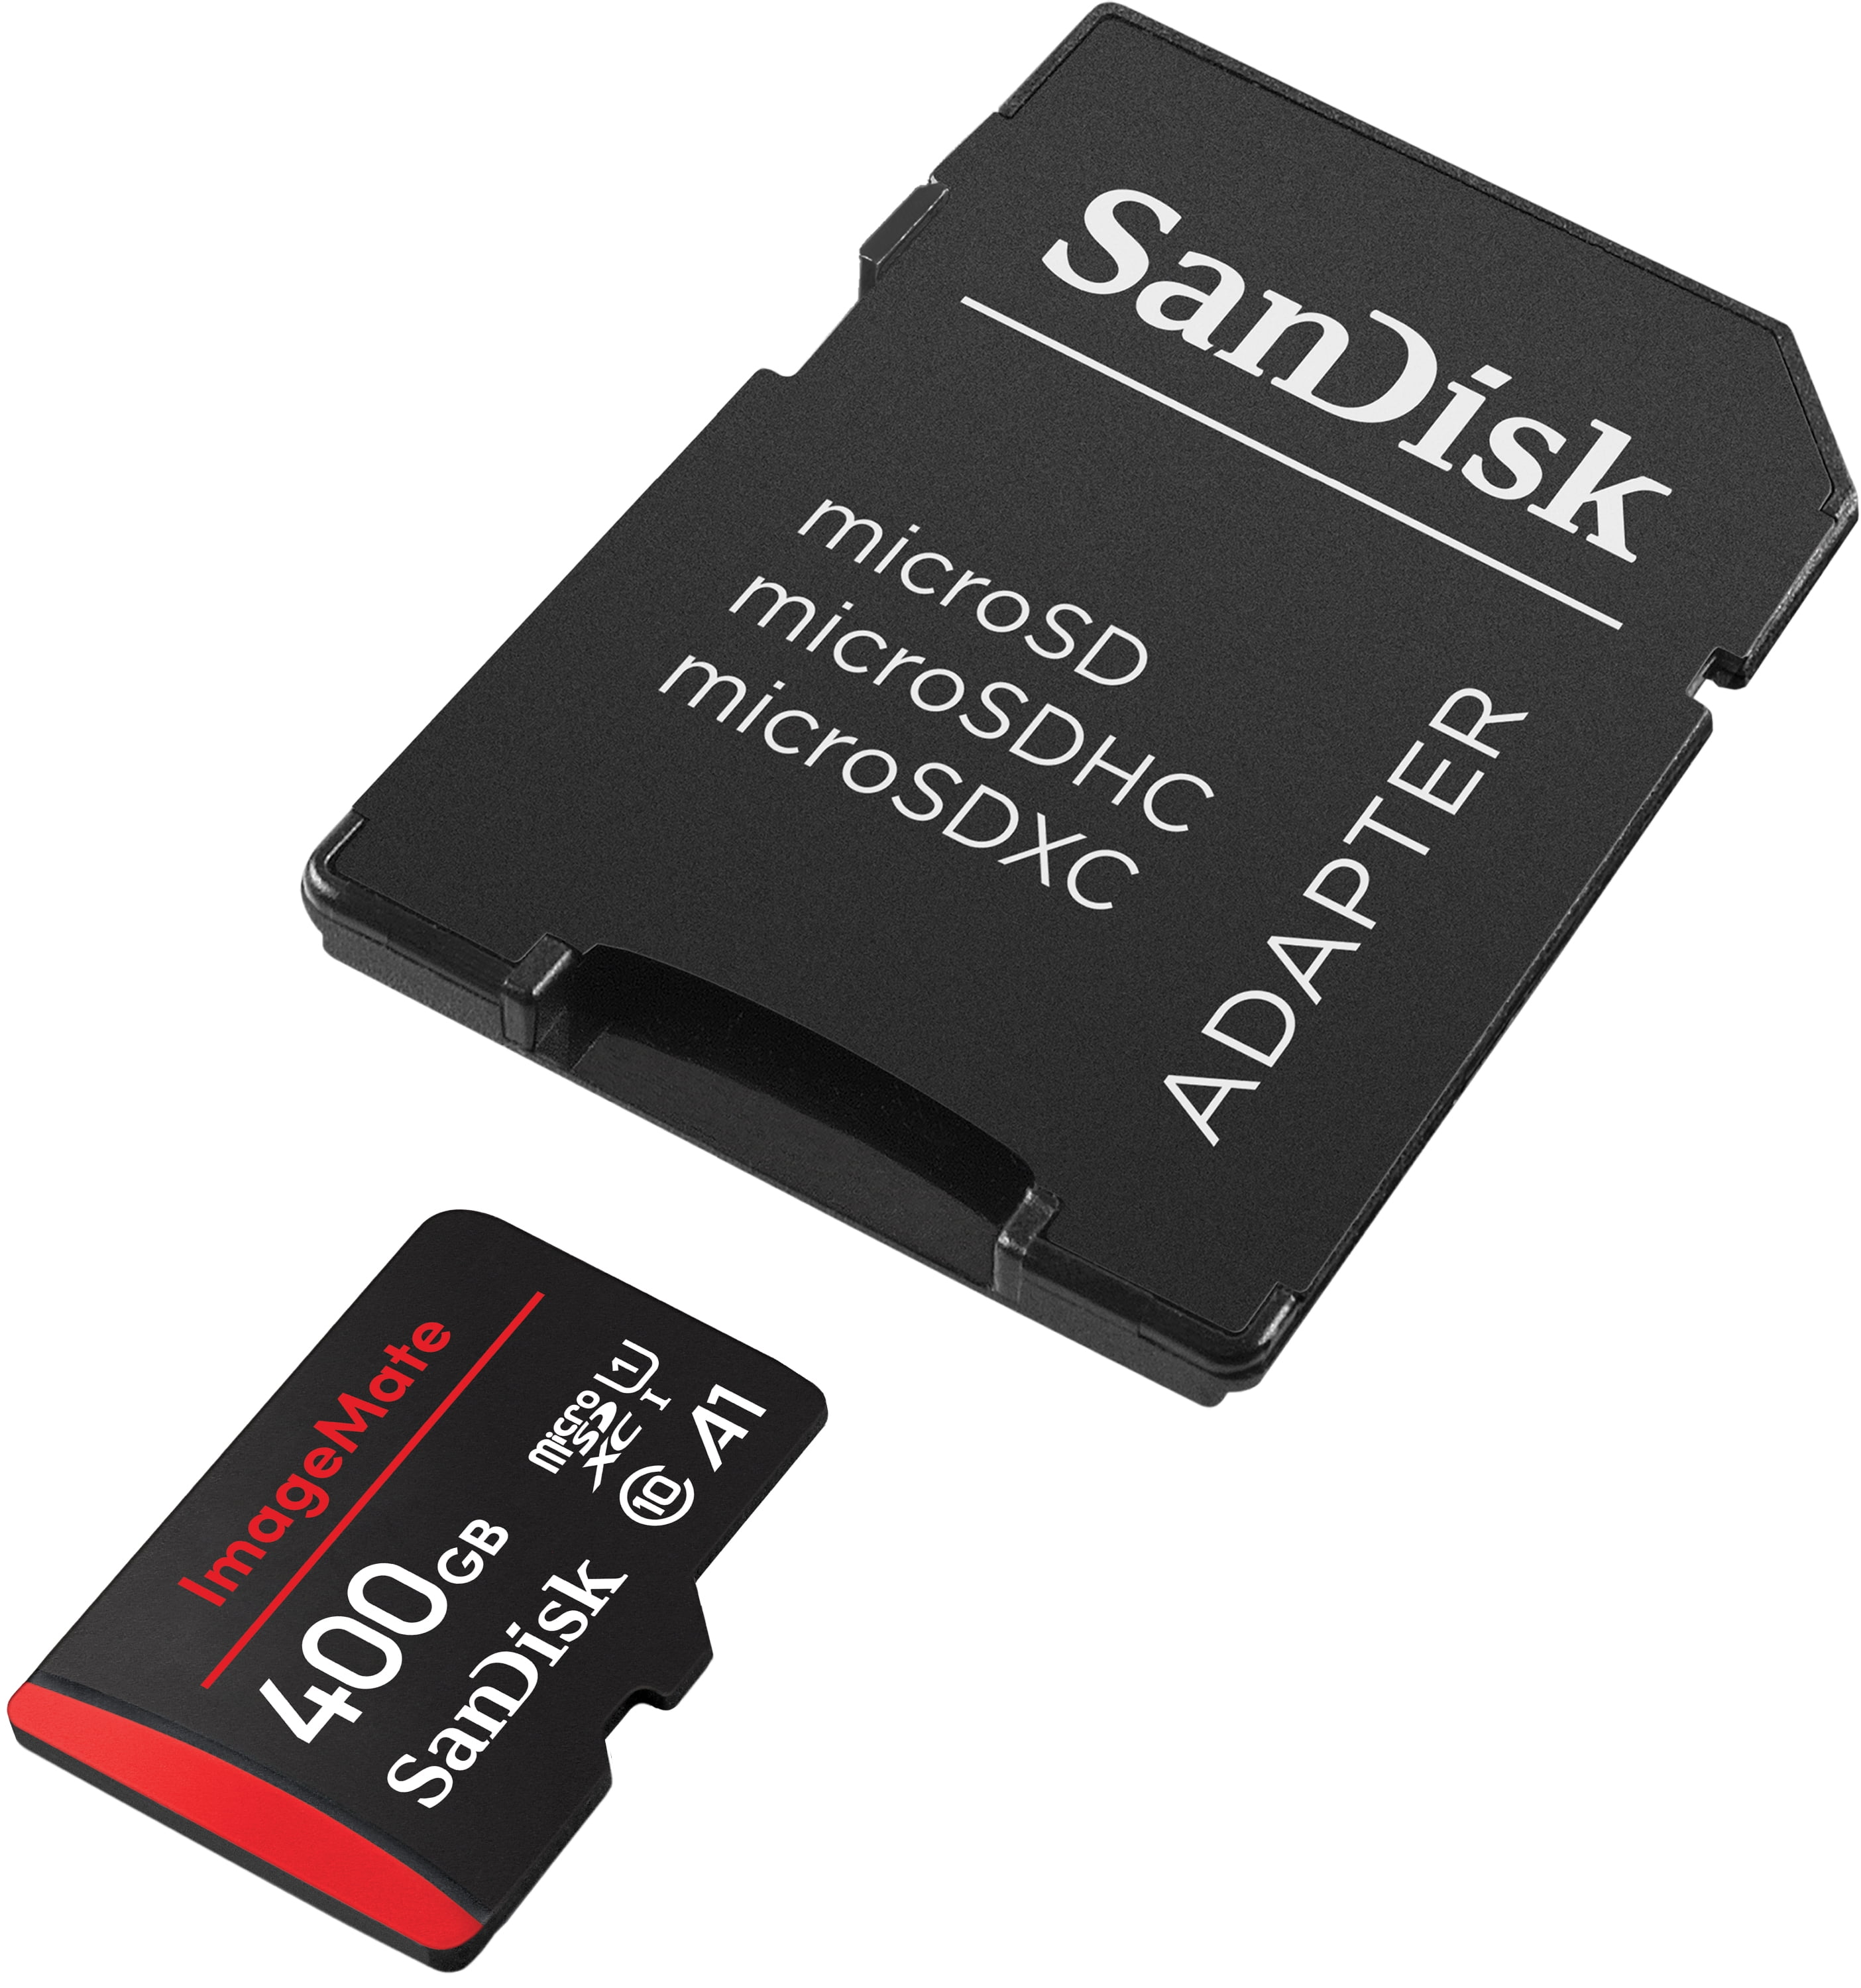 File:256 MB SD Card, SanDisk-2722.jpg - Wikimedia Commons